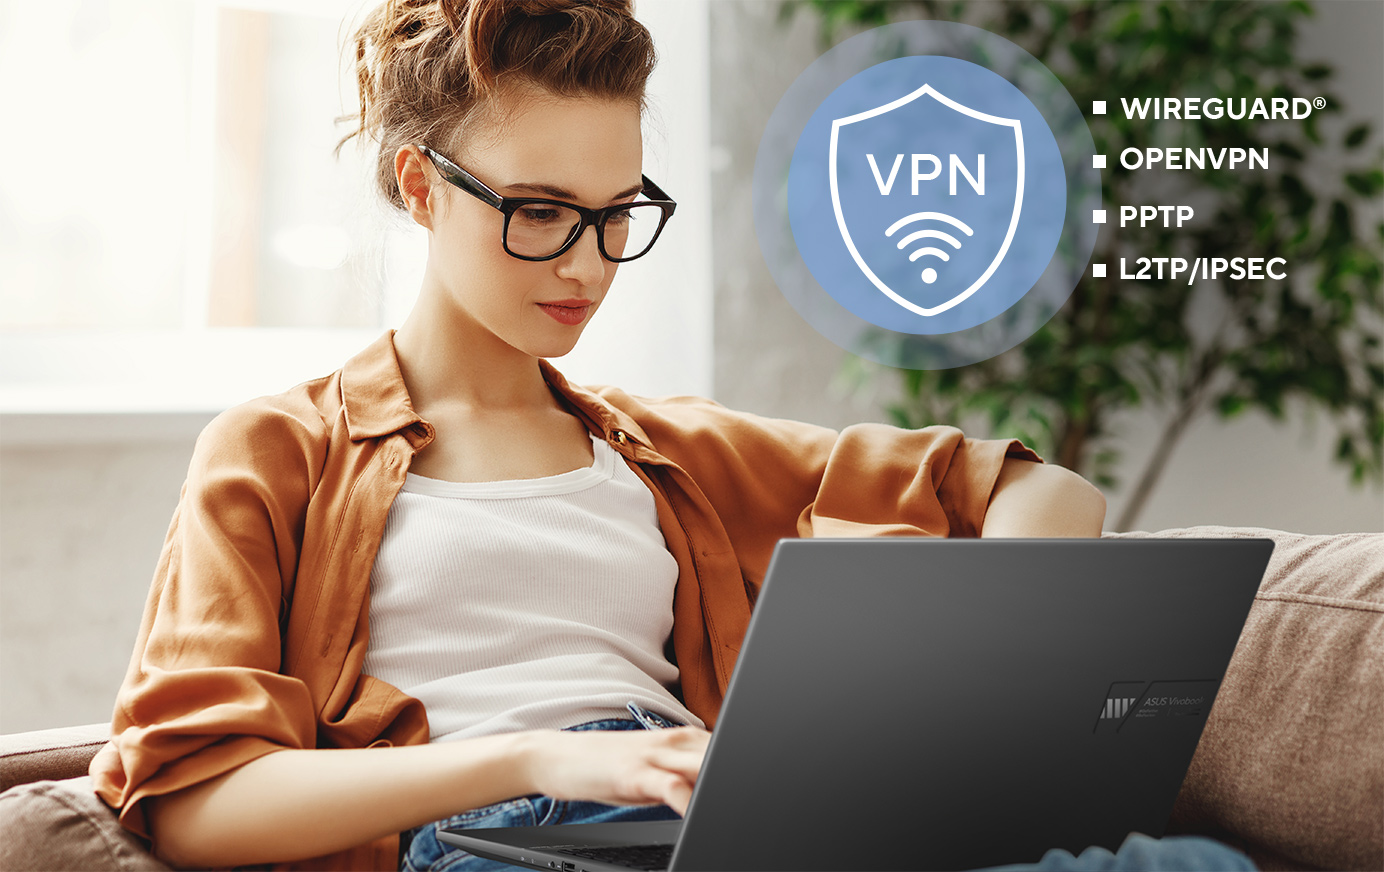 Routery ASUS podporujú rad bezpečnostných protokolov VPN, vrátane WireGuard®, OpenVPN, PPTP a L2TP/IPSec.